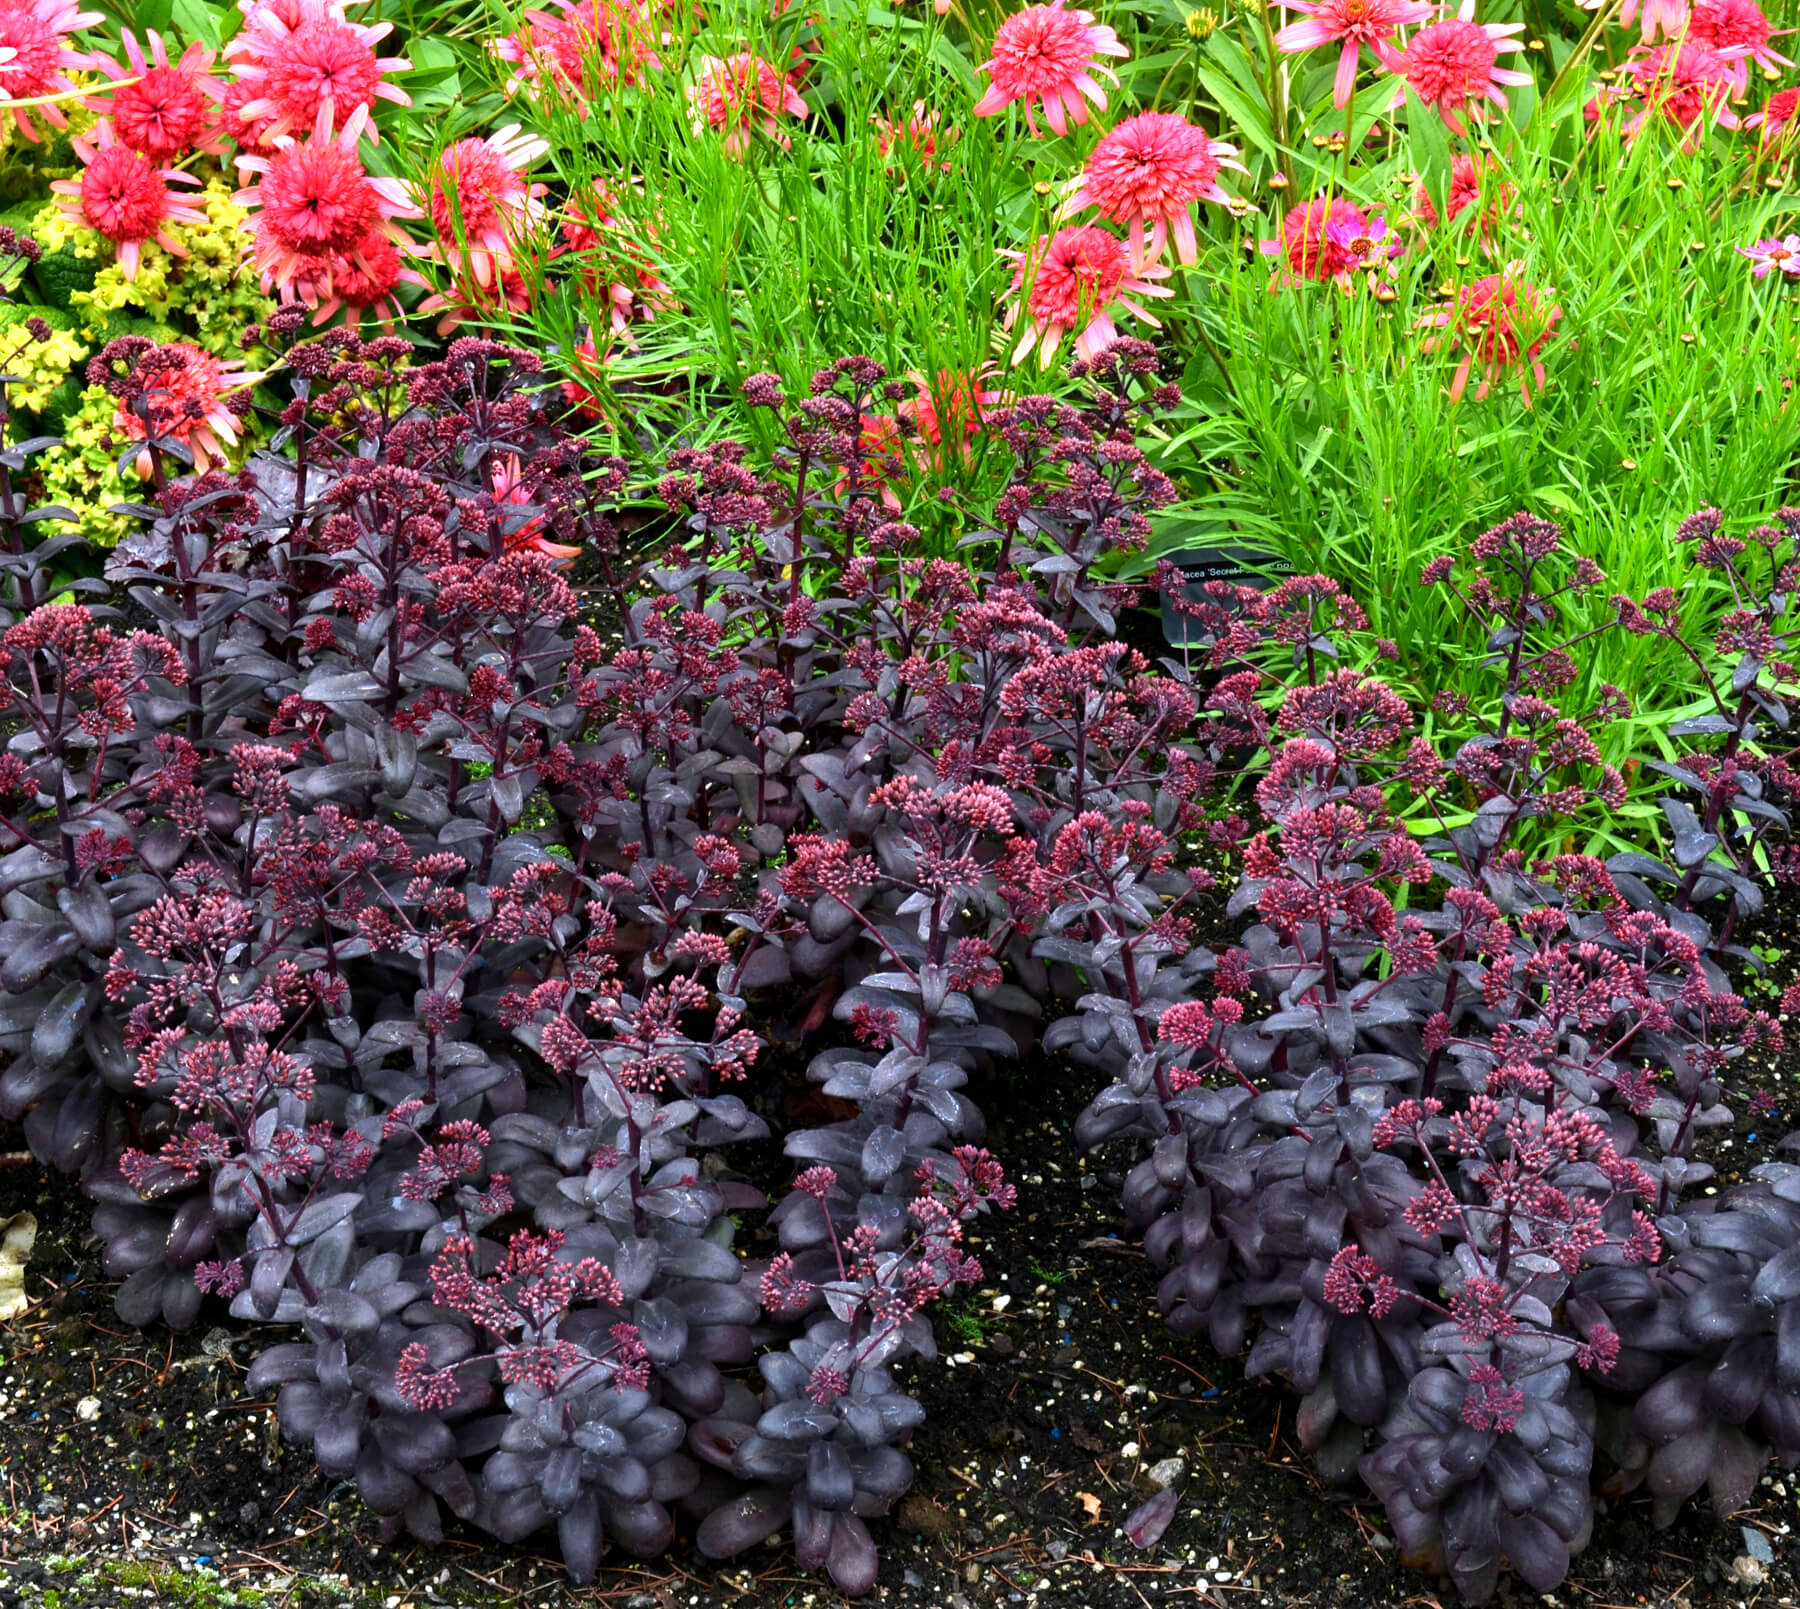 The upright Sedum 'Desert Black' is tolerant of heat, drought in addition to offering unique garden color. 